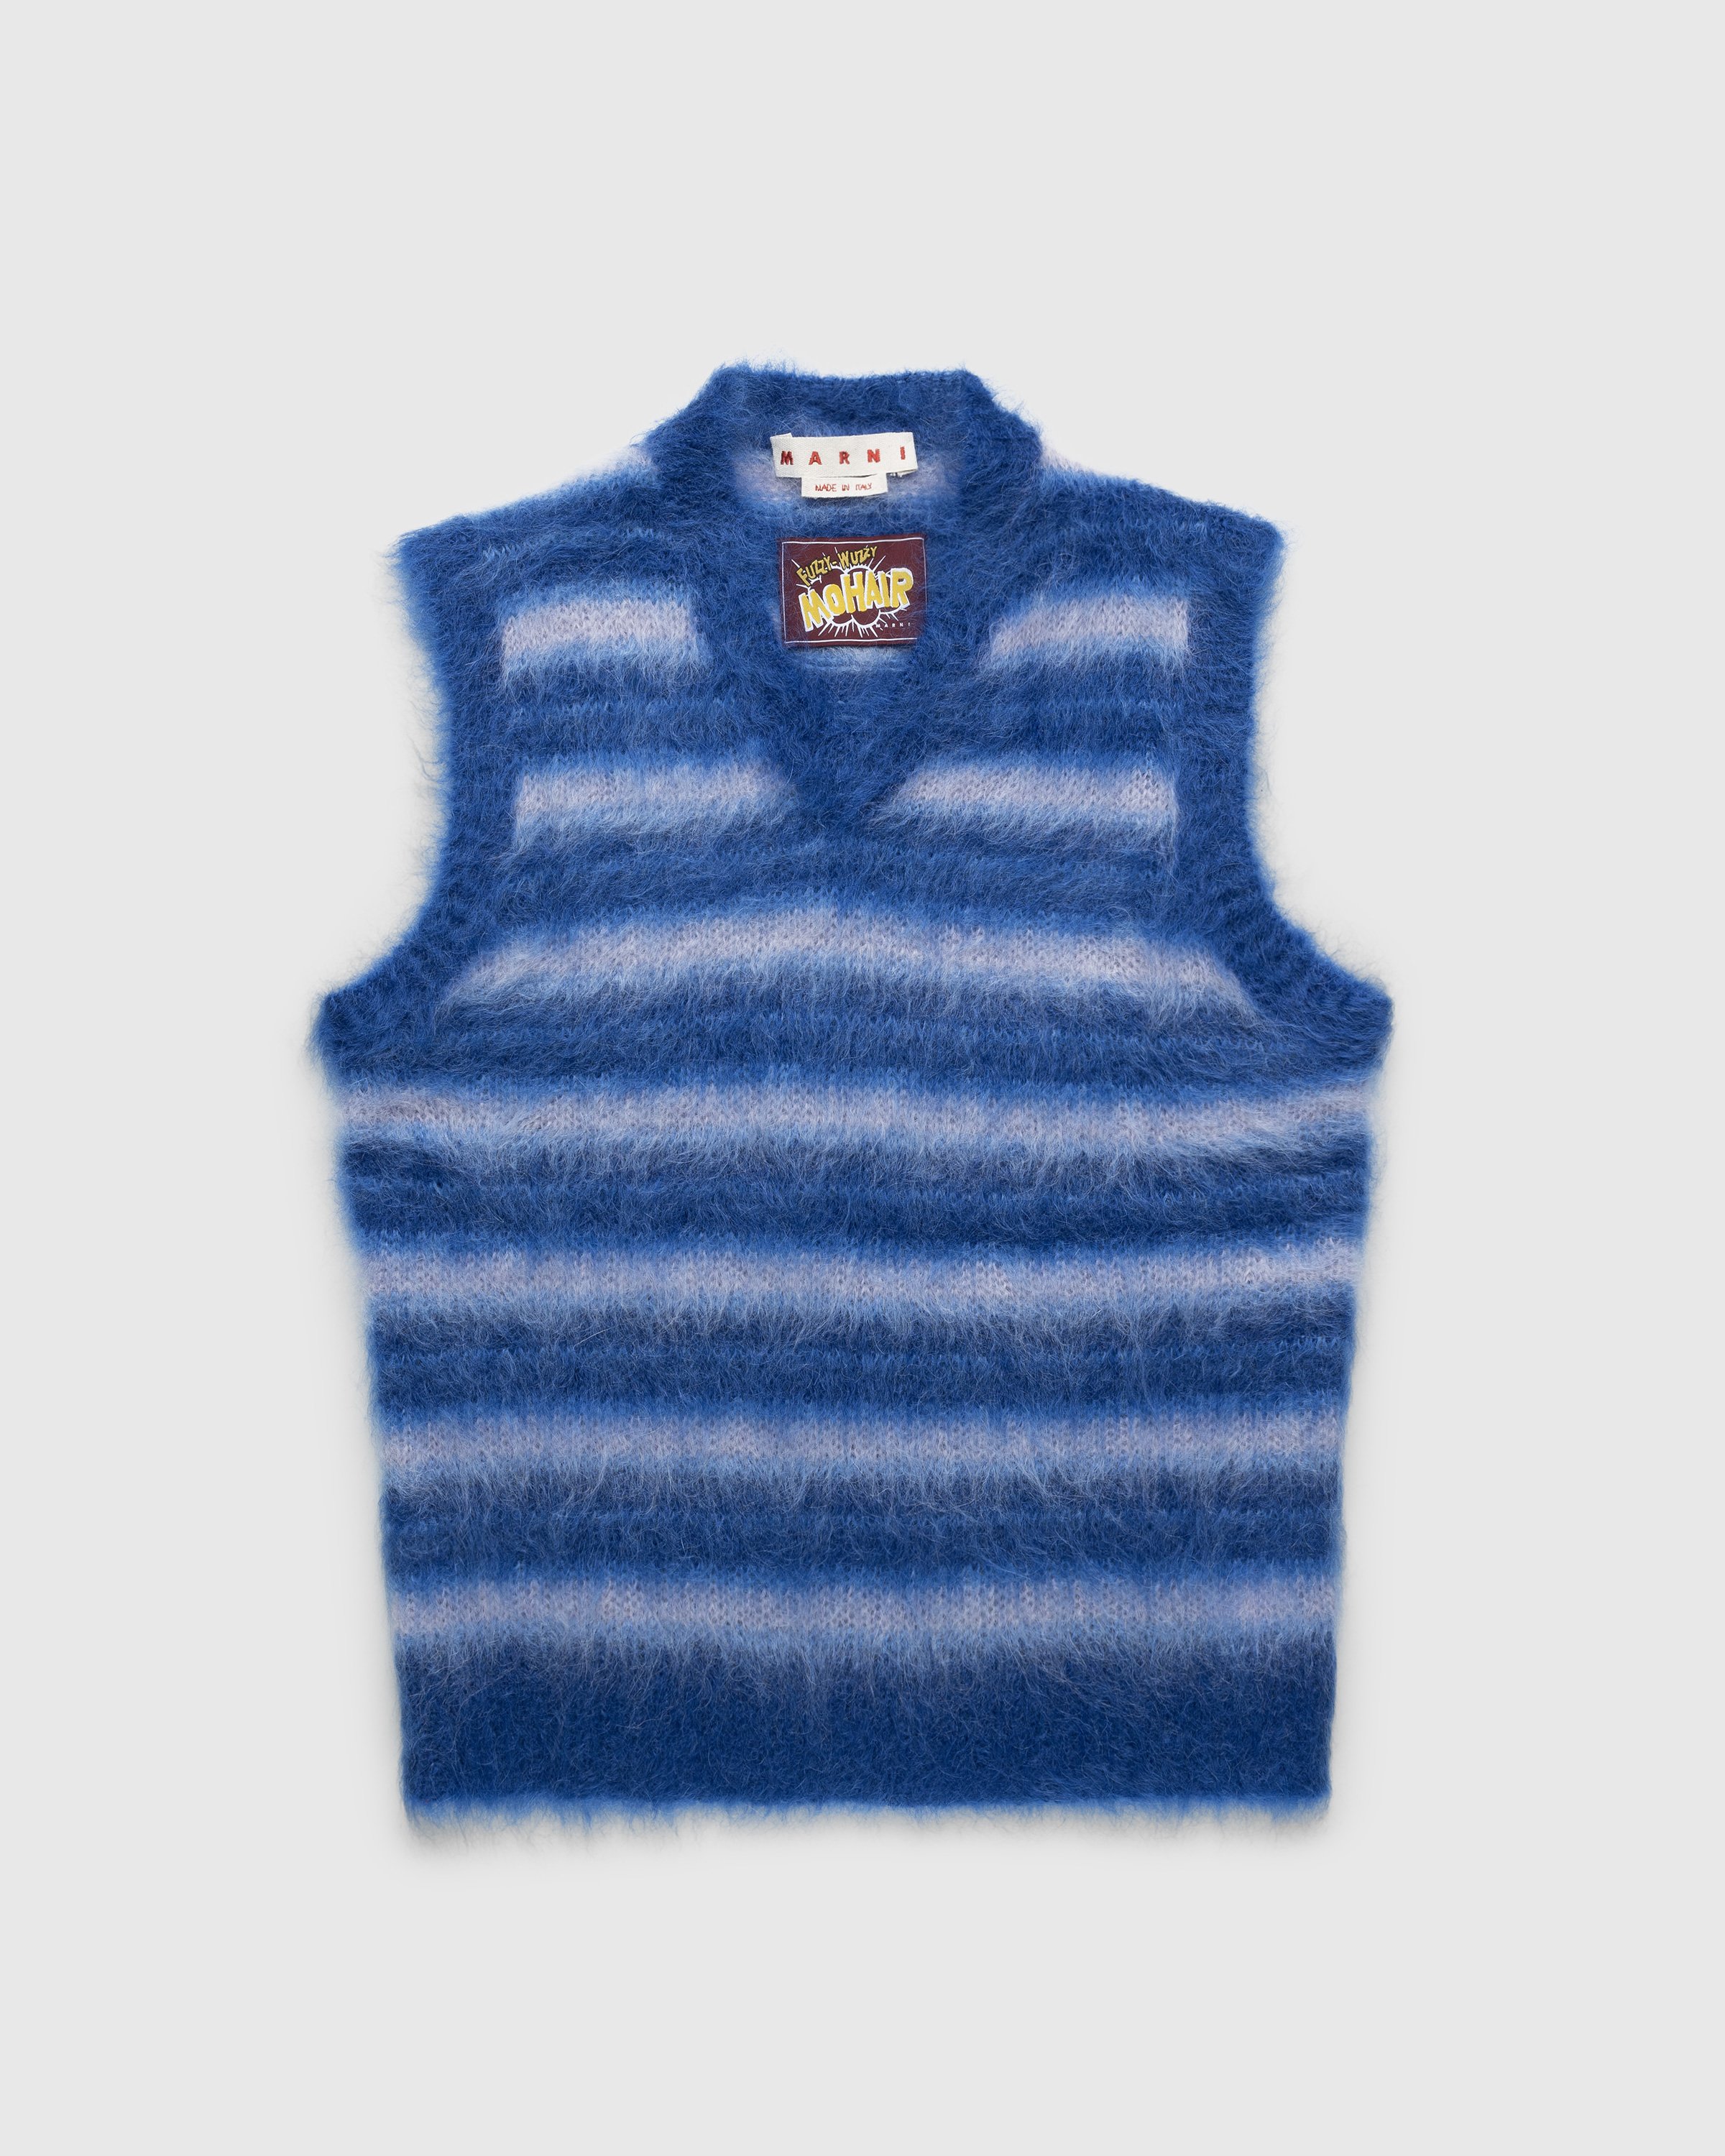 Marni - Striped V-Neck Sweater Vest Blue - Clothing - Blue - Image 1